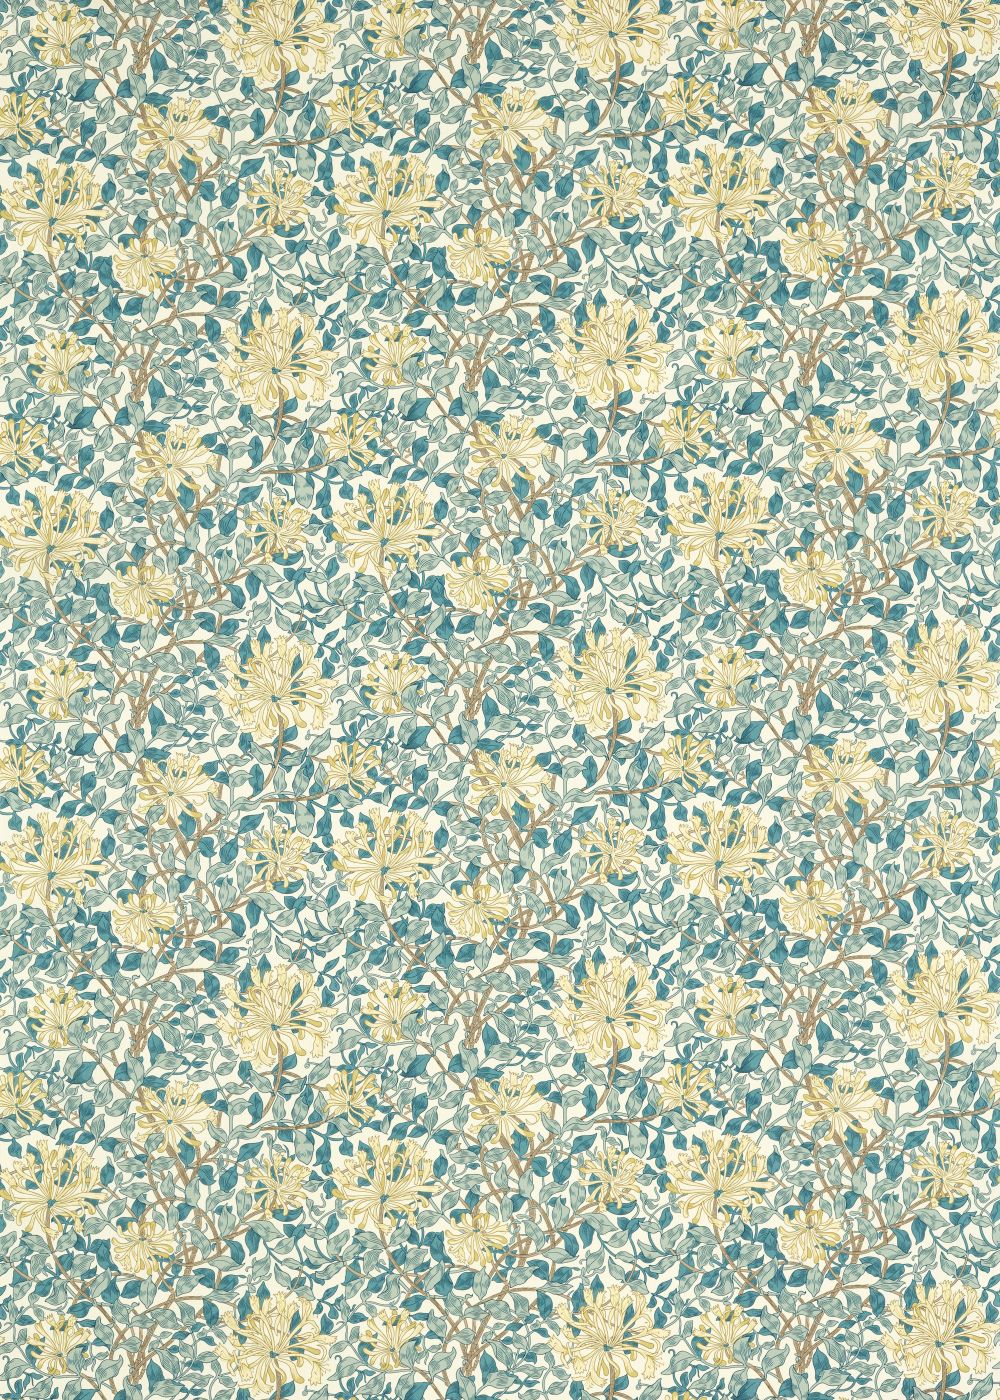 Honeysuckle Fabric - Teal / Soft Lemon - by Morris